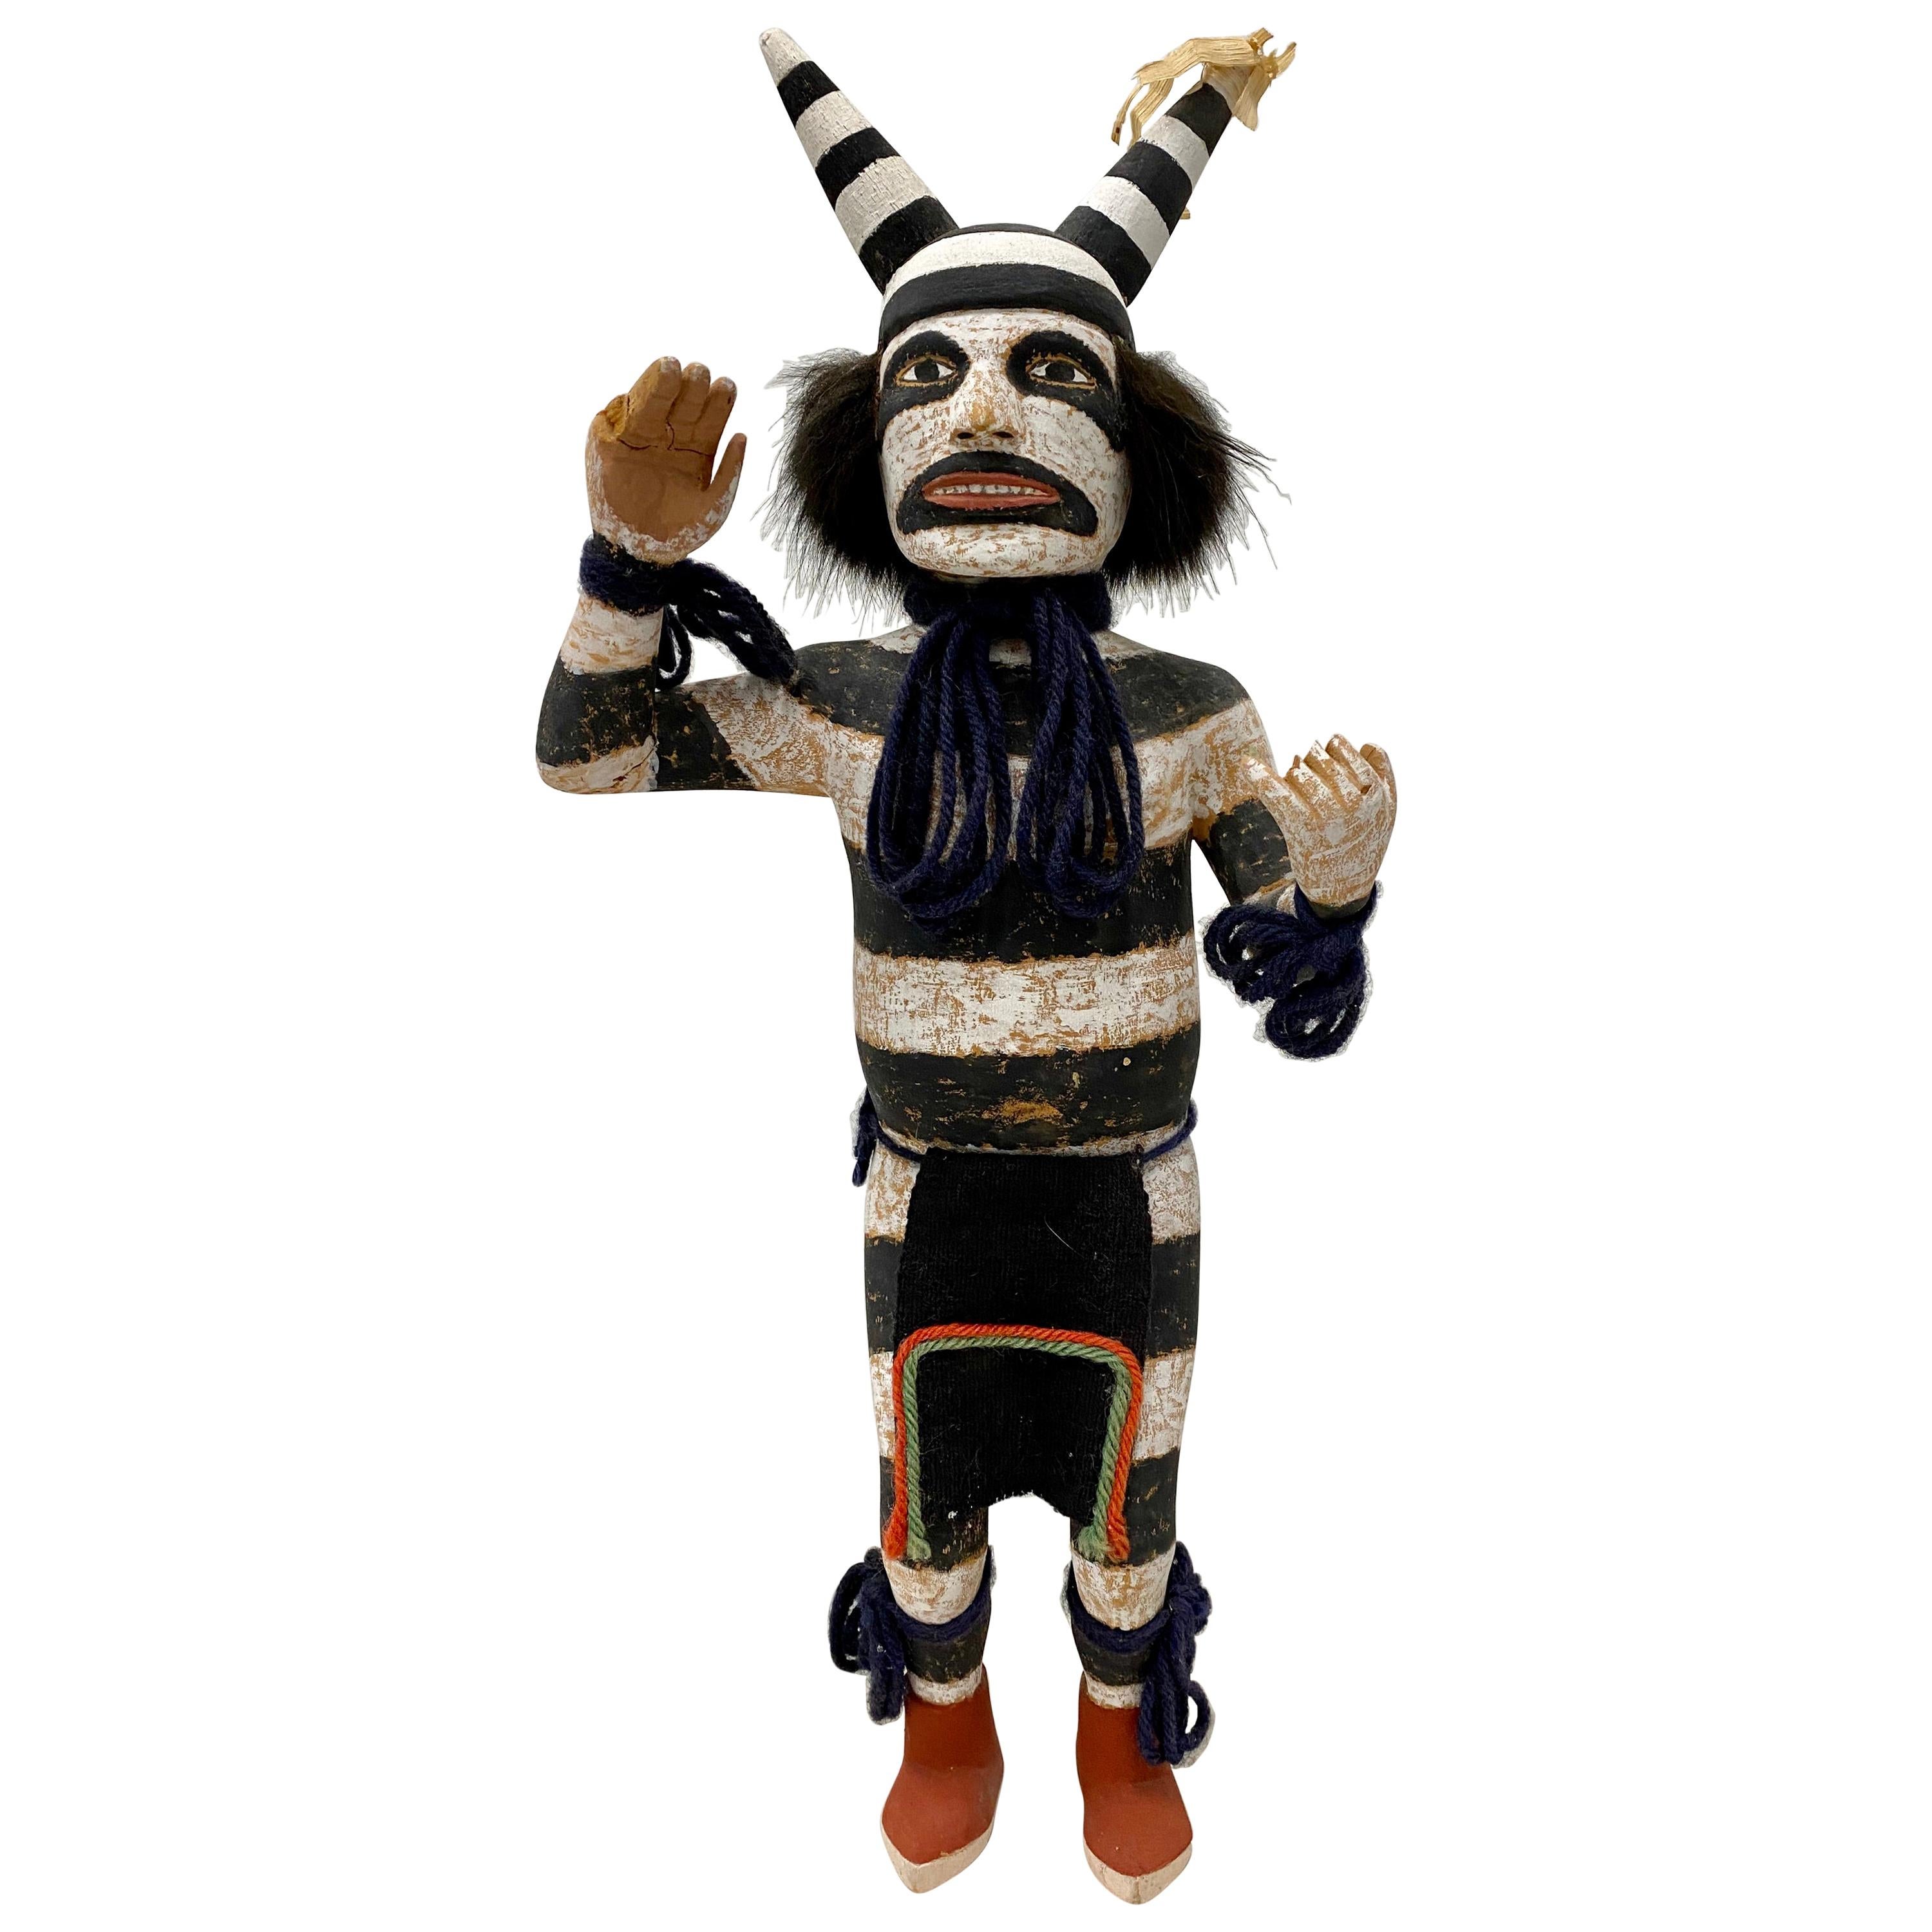 Vintage 1970s Hopi Katsina Figure "Hano Clown" Kachina Doll, circa 1974